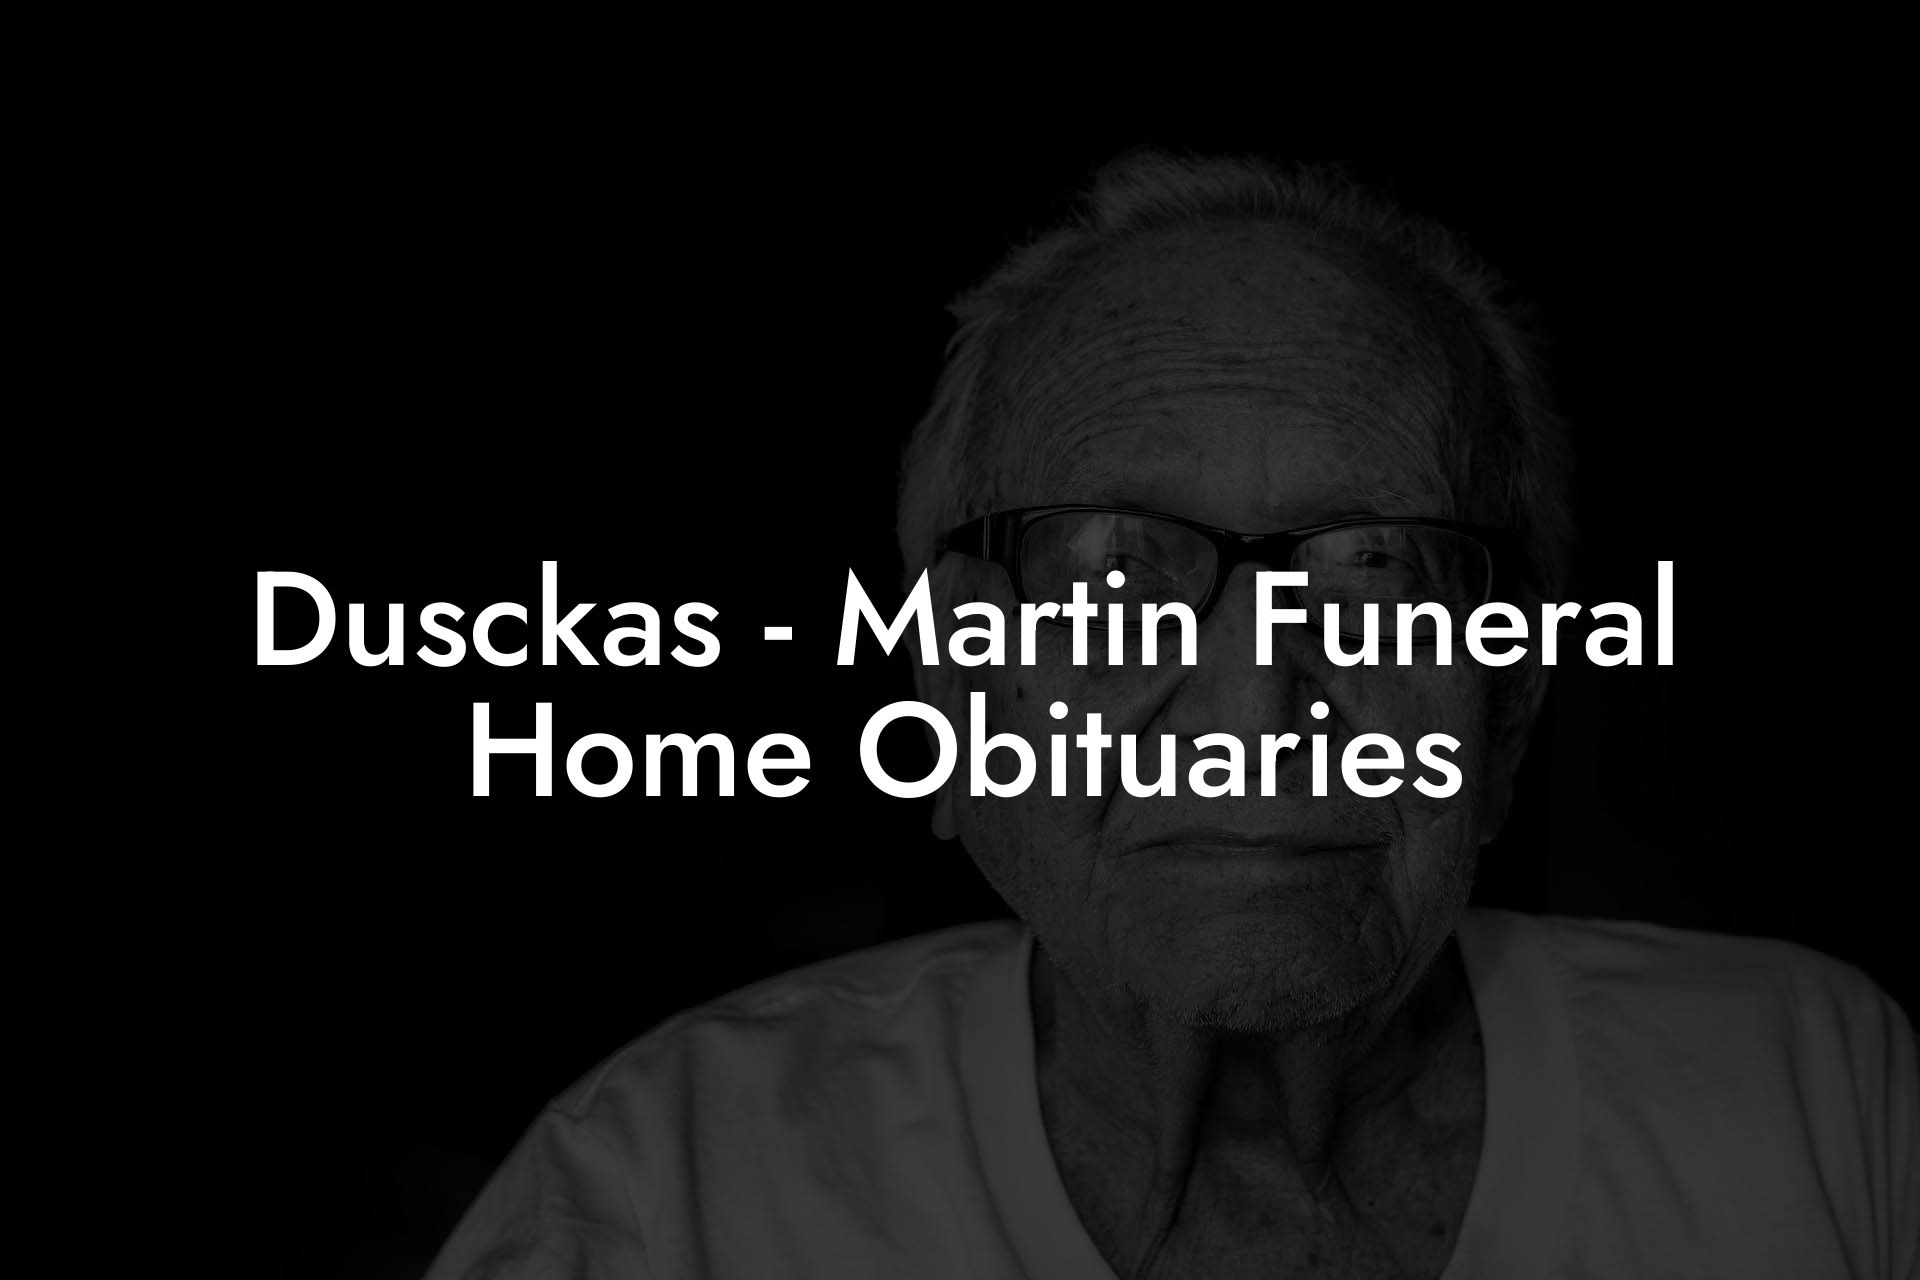 Dusckas - Martin Funeral Home Obituaries